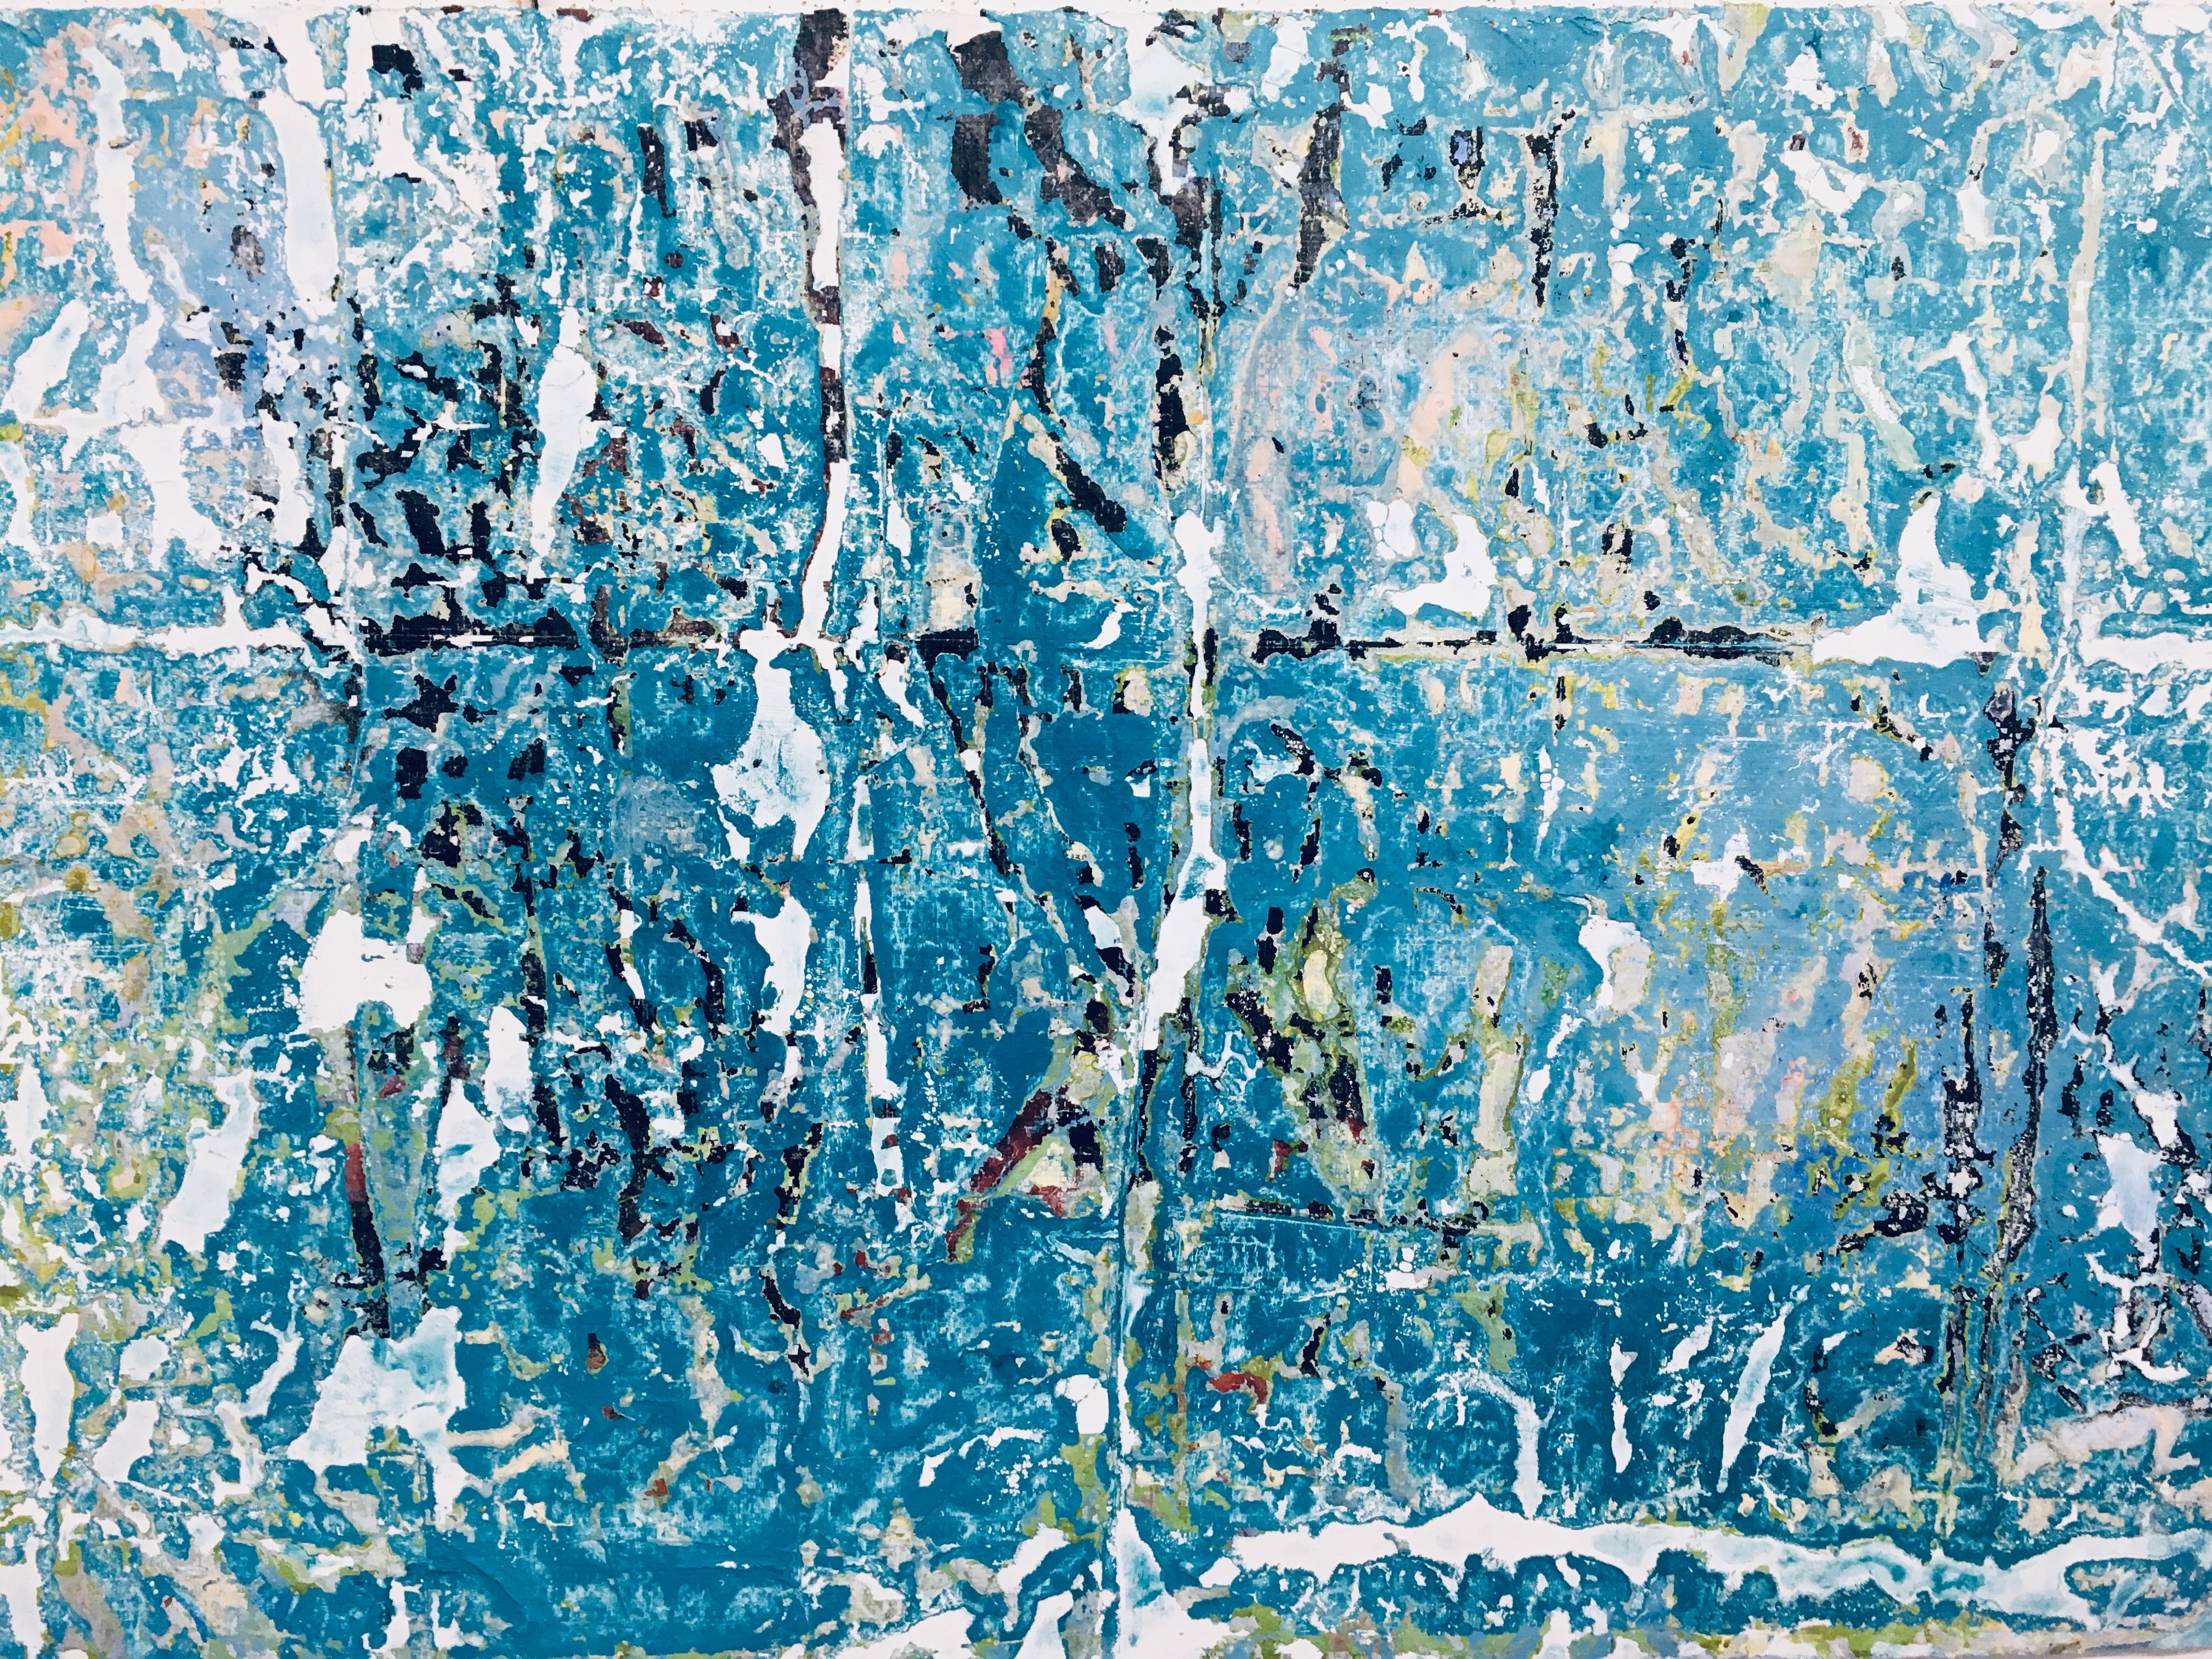 Blue Ice, Mid Century, vivid blue tones, abstract, textured acrylic on paper - Mixed Media Art by Bonny Novesky